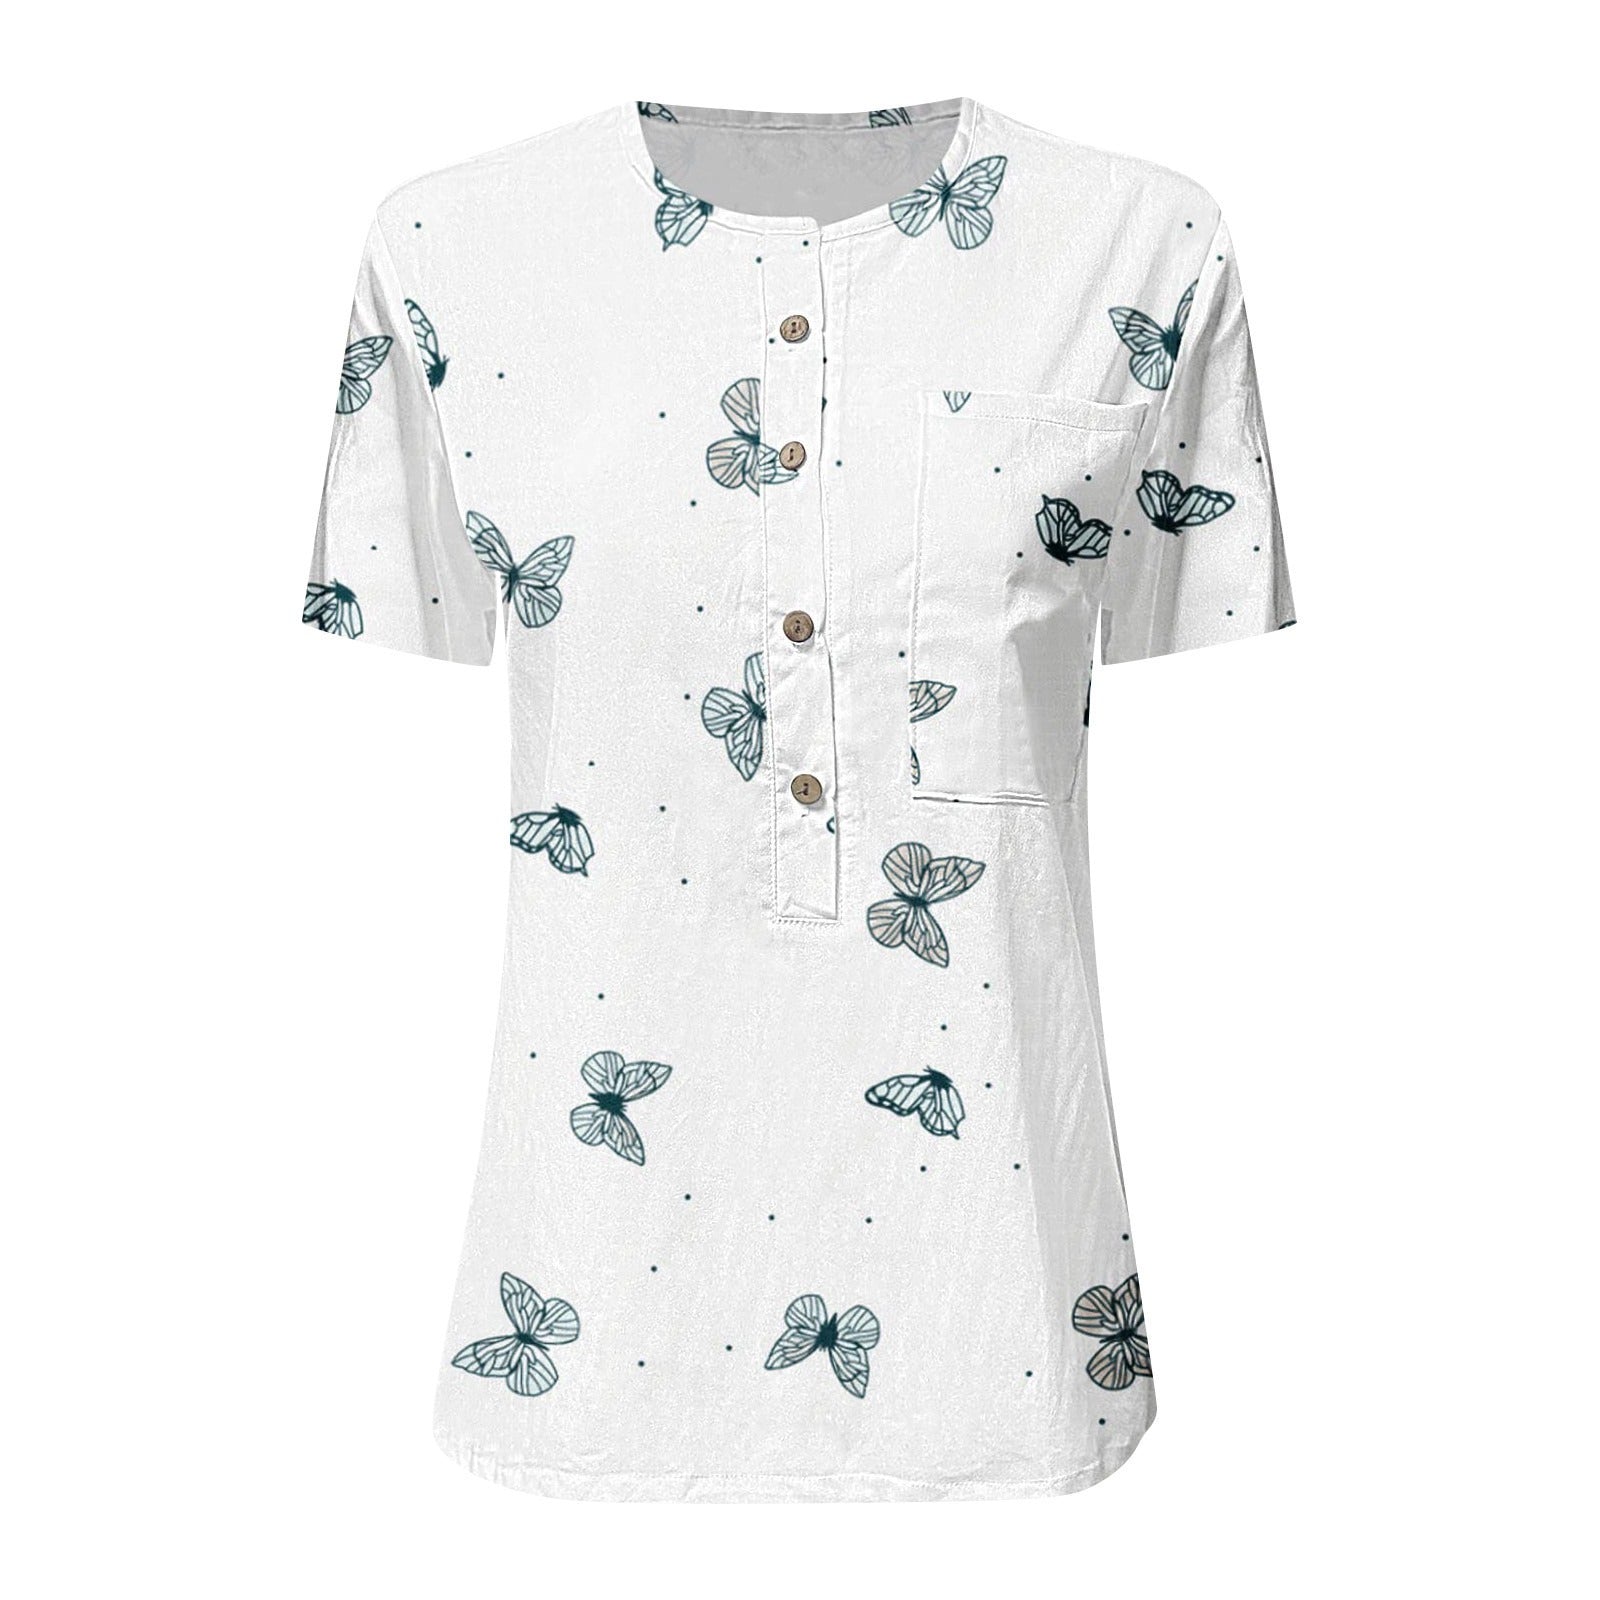 New Printed Loose Shirt Casual Leaf Women's Shirt Irregular Printed T-Shirt